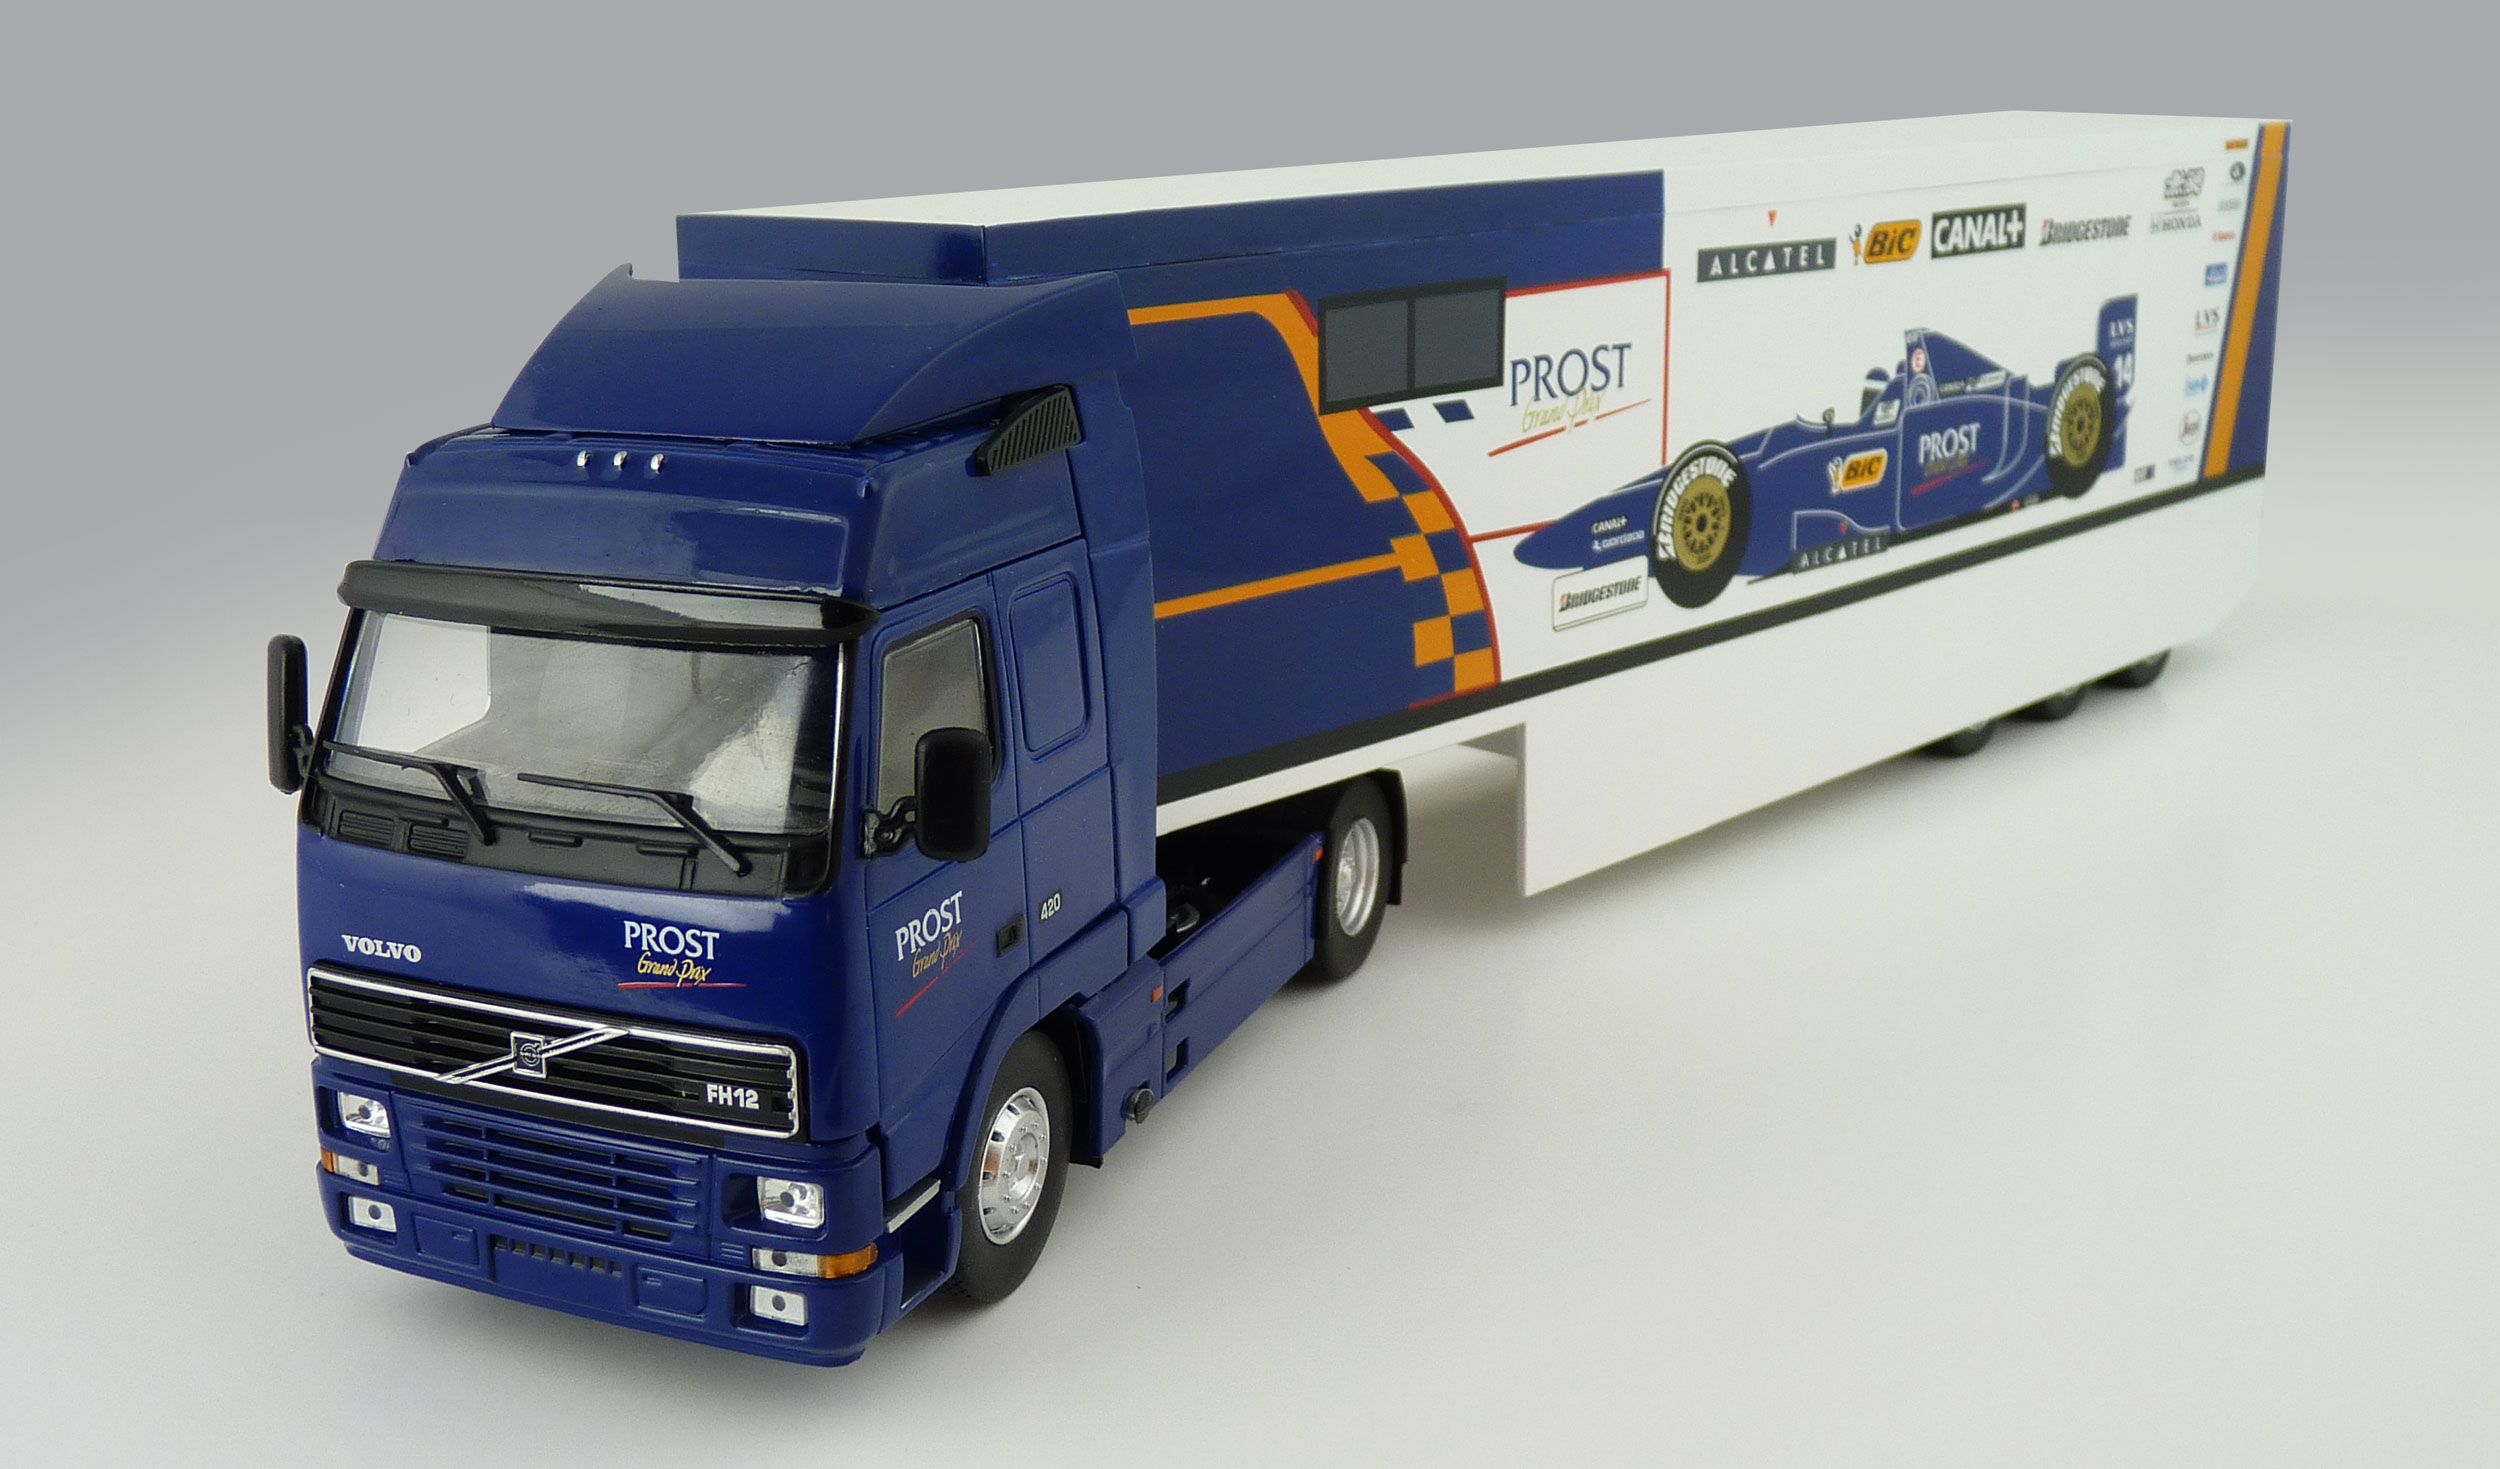 F1CC Prost Grand Prix Transporter Truck